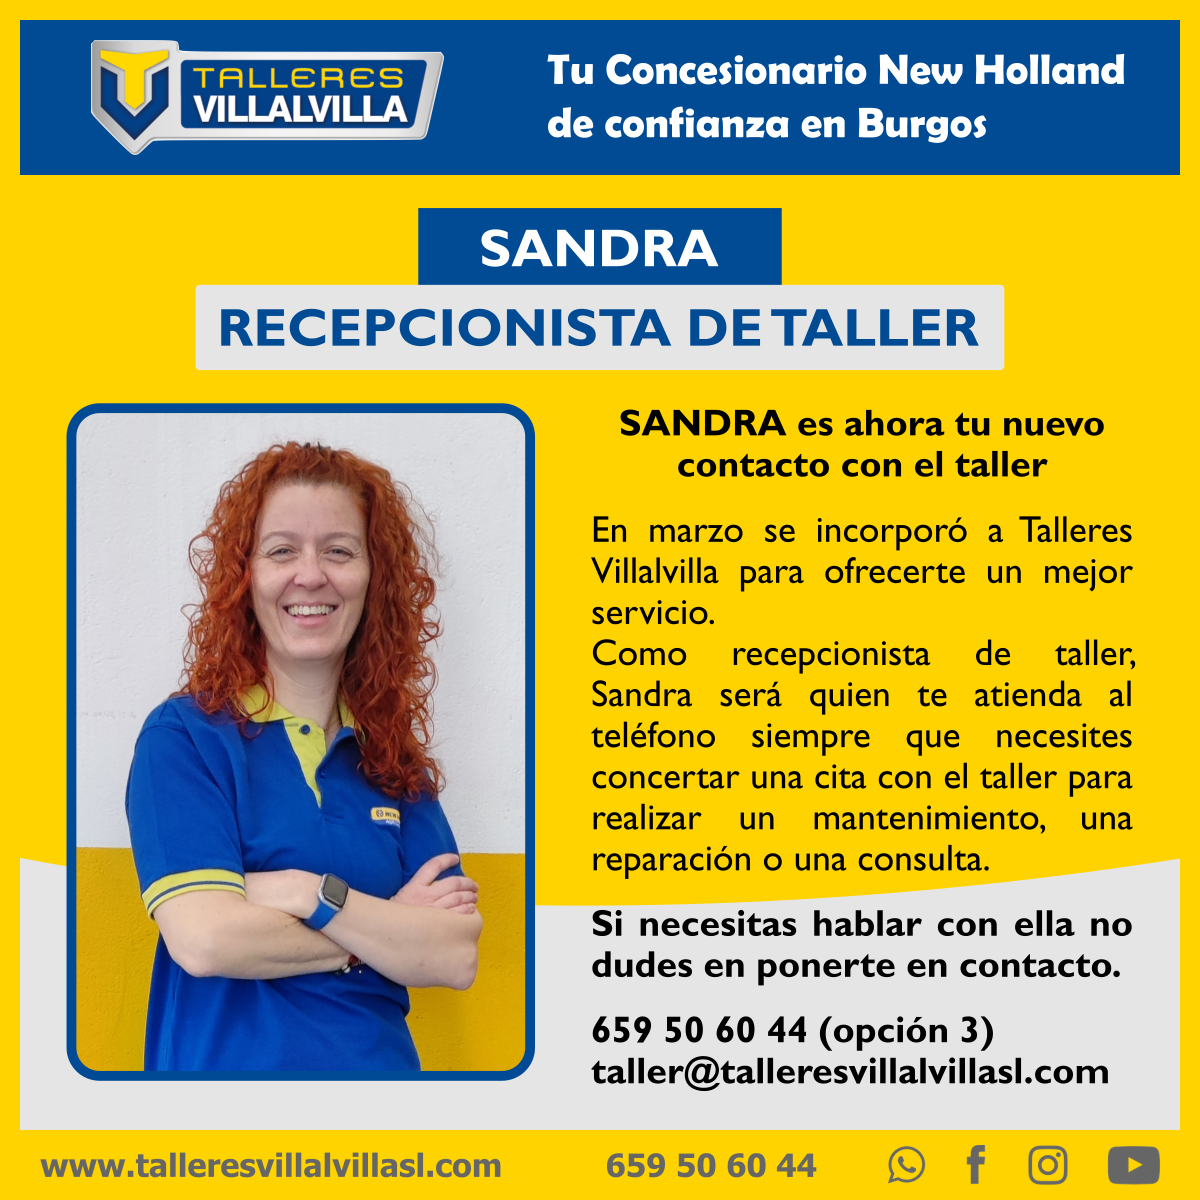 SANDRA, RECEPCIONISTA DE TALLER